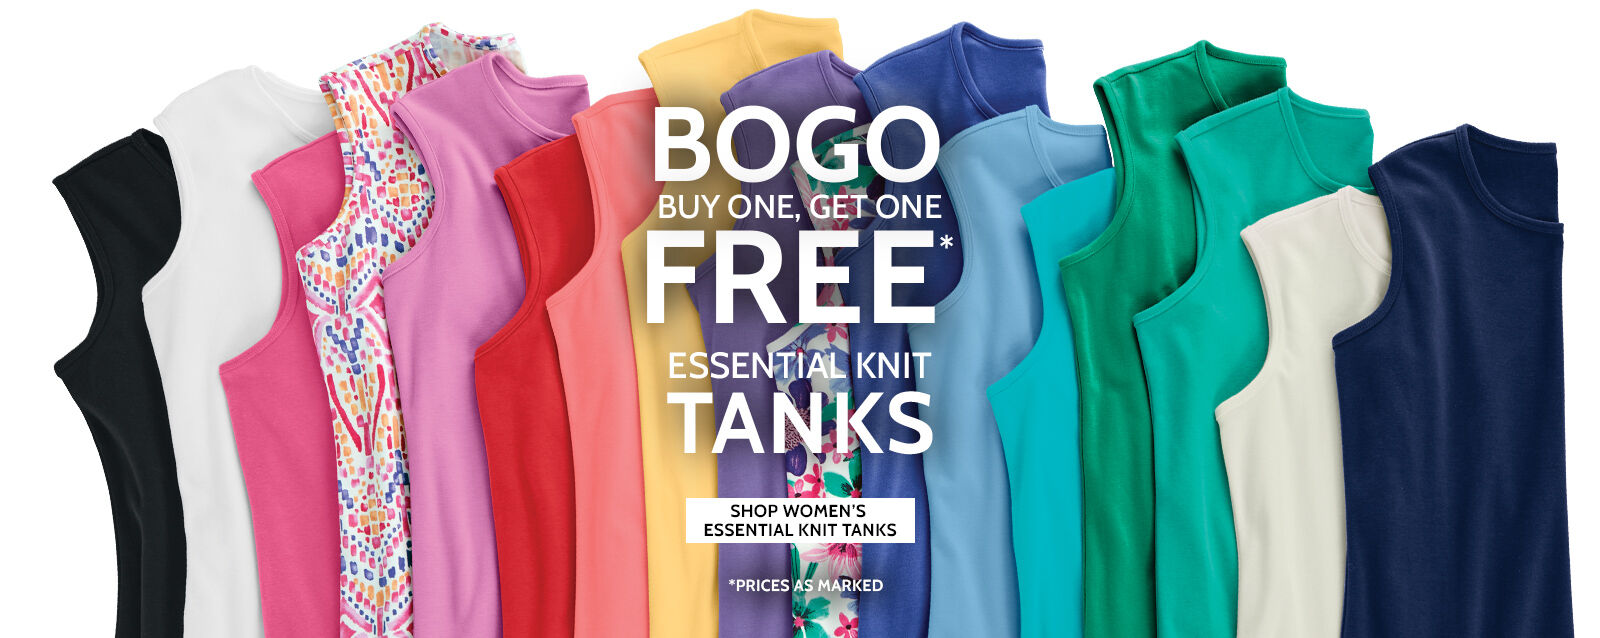 bogo buy one, get one free* essential knit tanks shop essential knit tanks *prices as marked